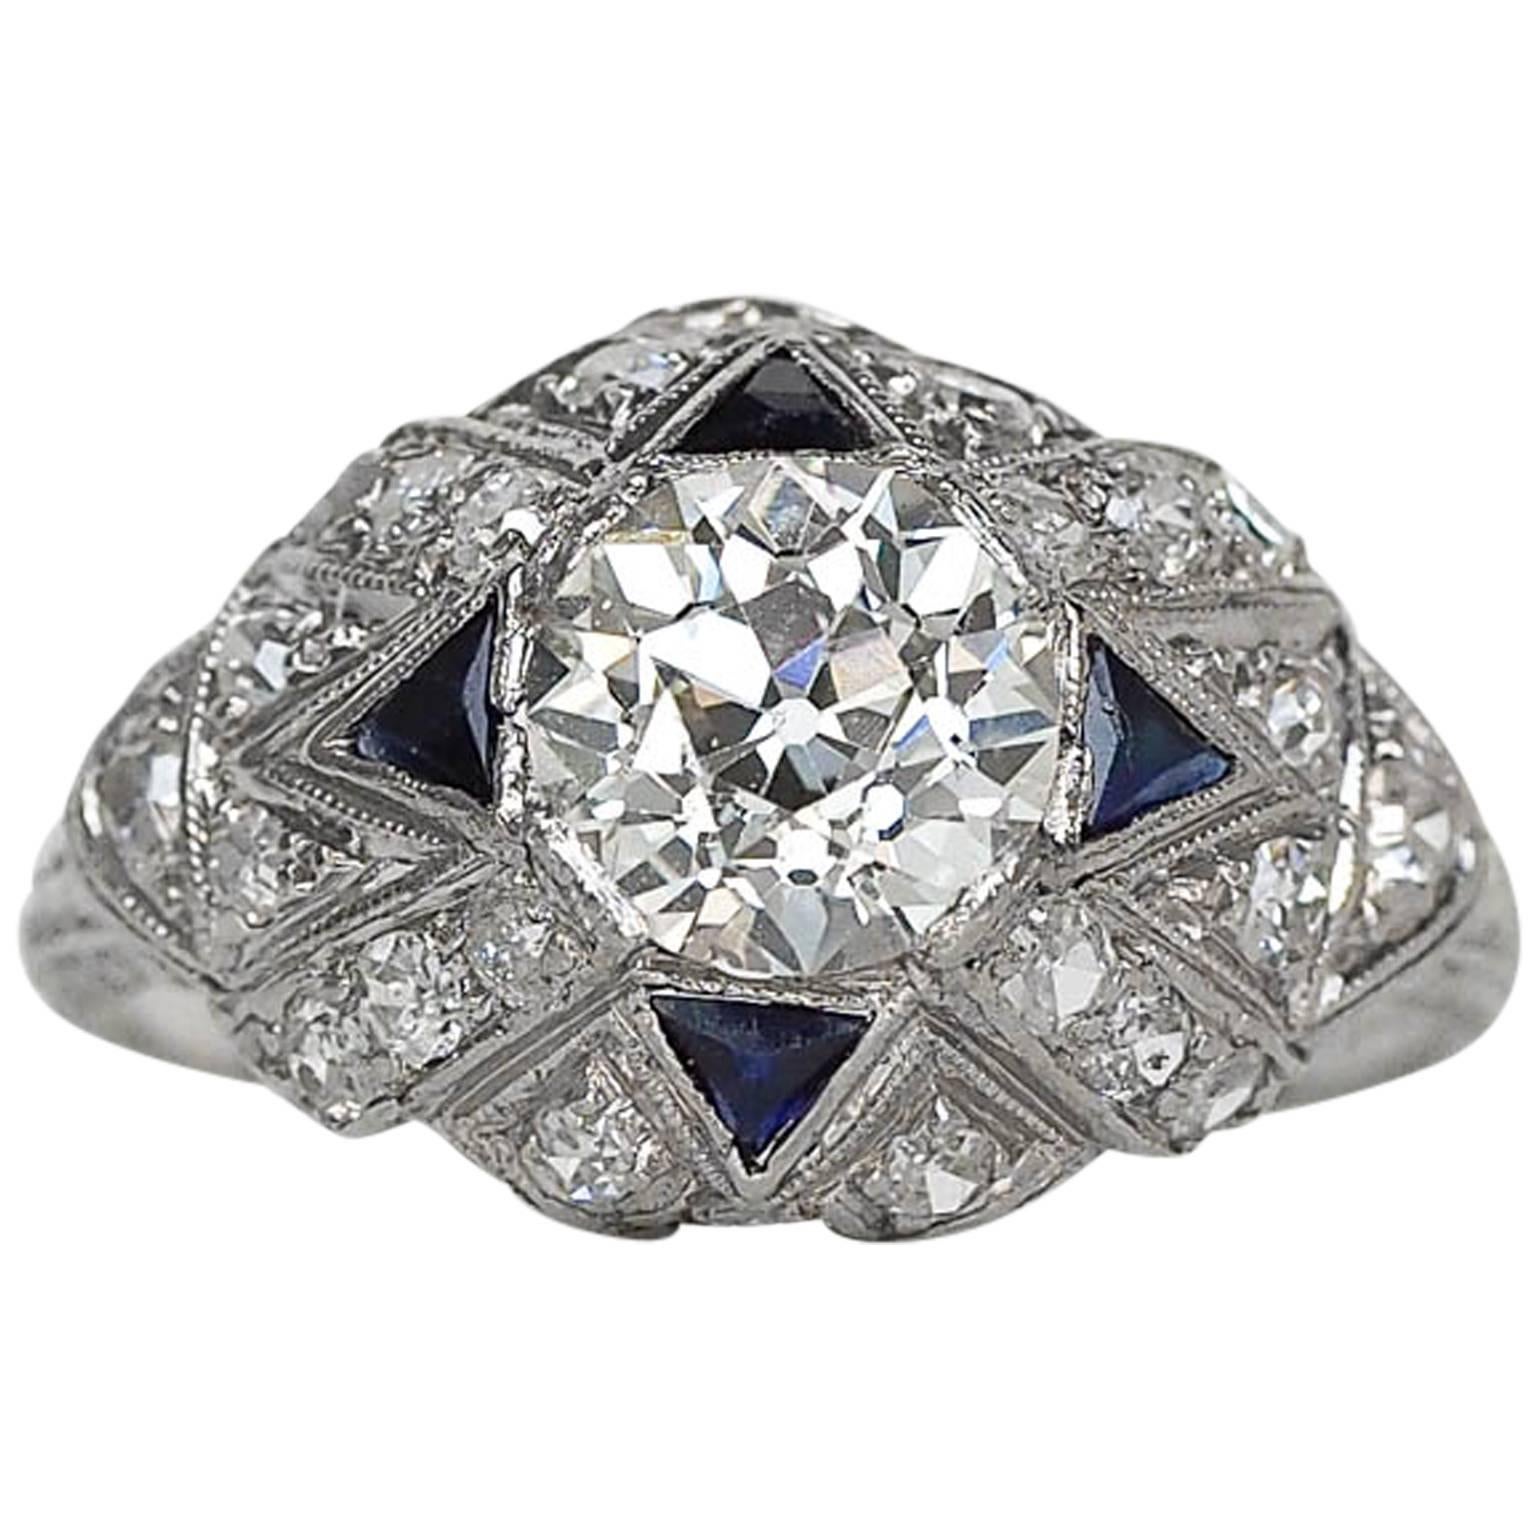 1930s Art Deco 1.28 Carat GIA Certified Old European Diamond Engagement Ring